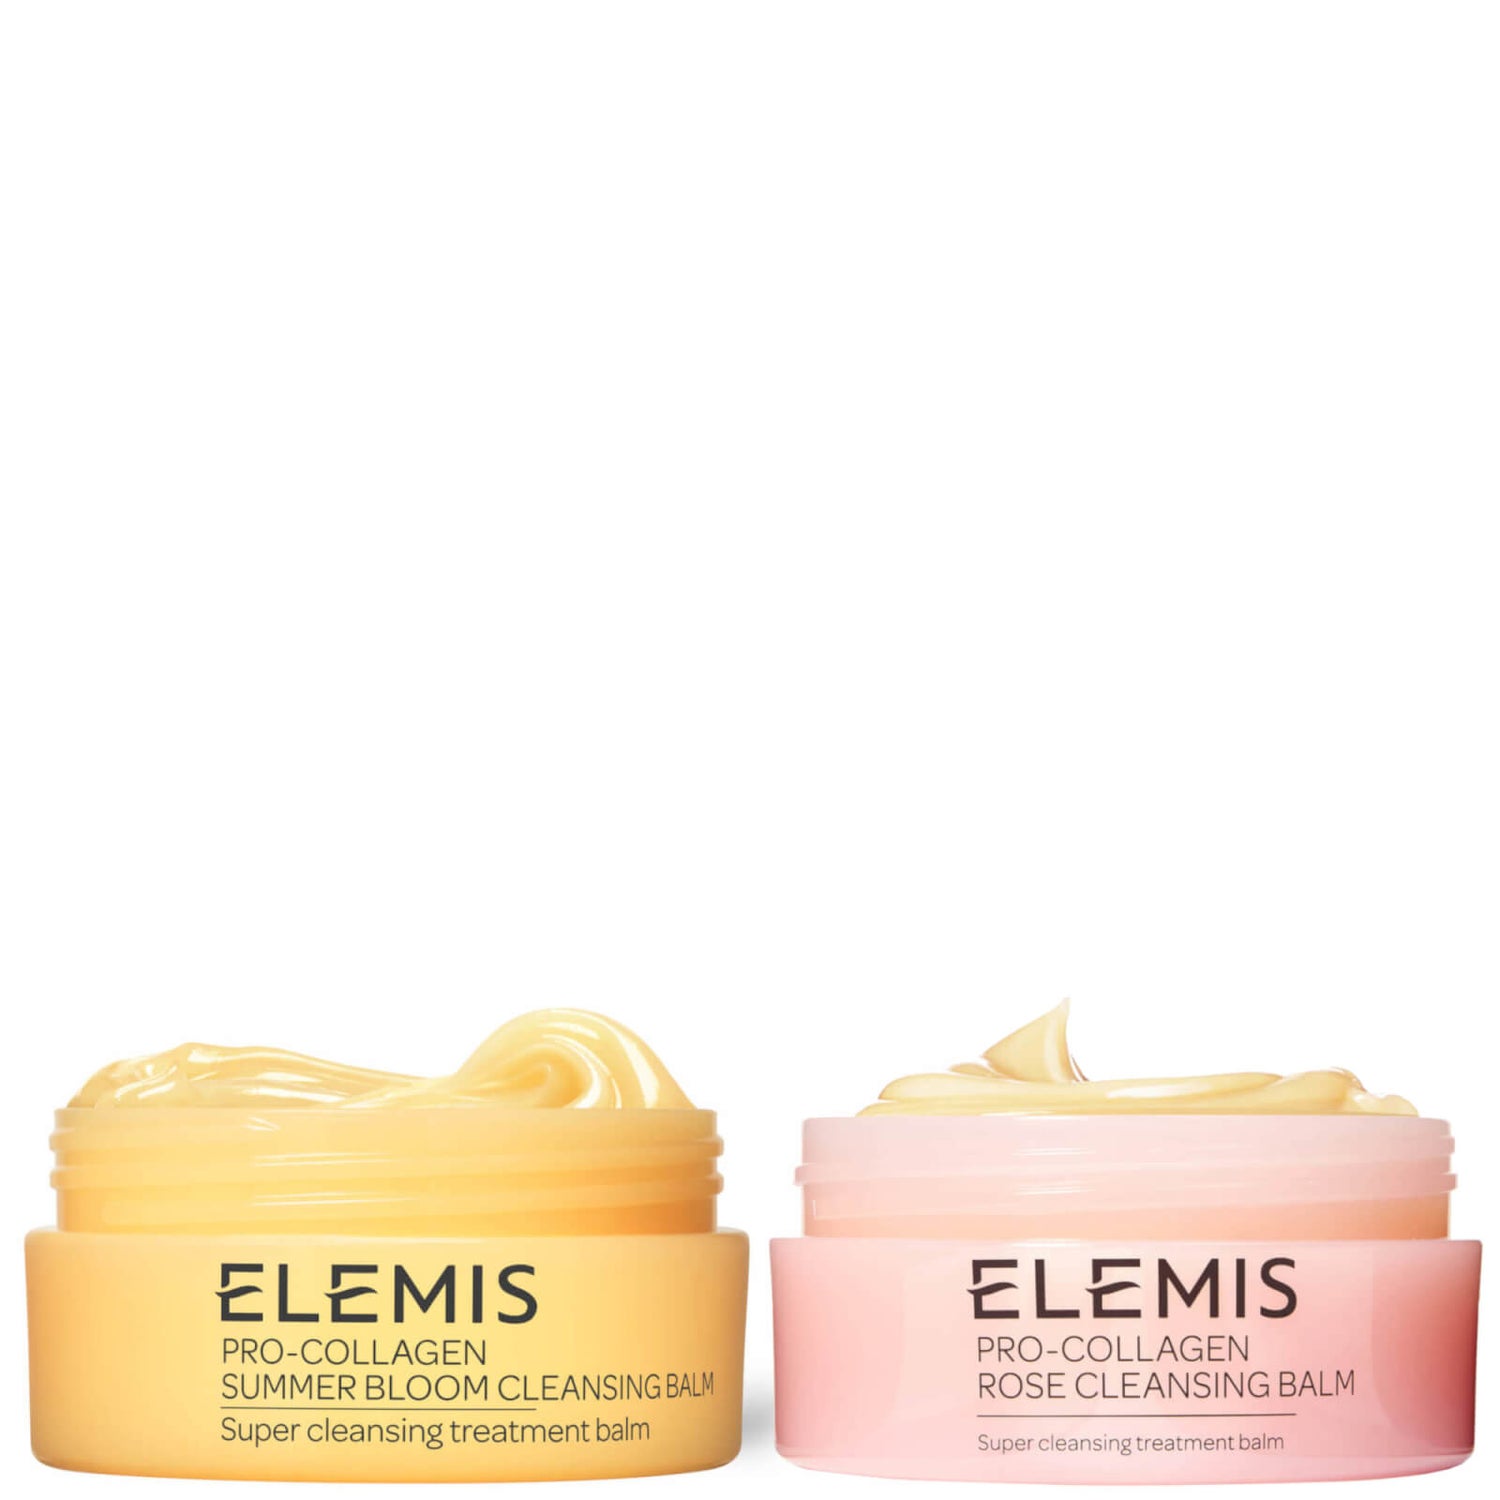 Elemis Pro-Collagen Cleansing Balm Duo (Worth £96.00)